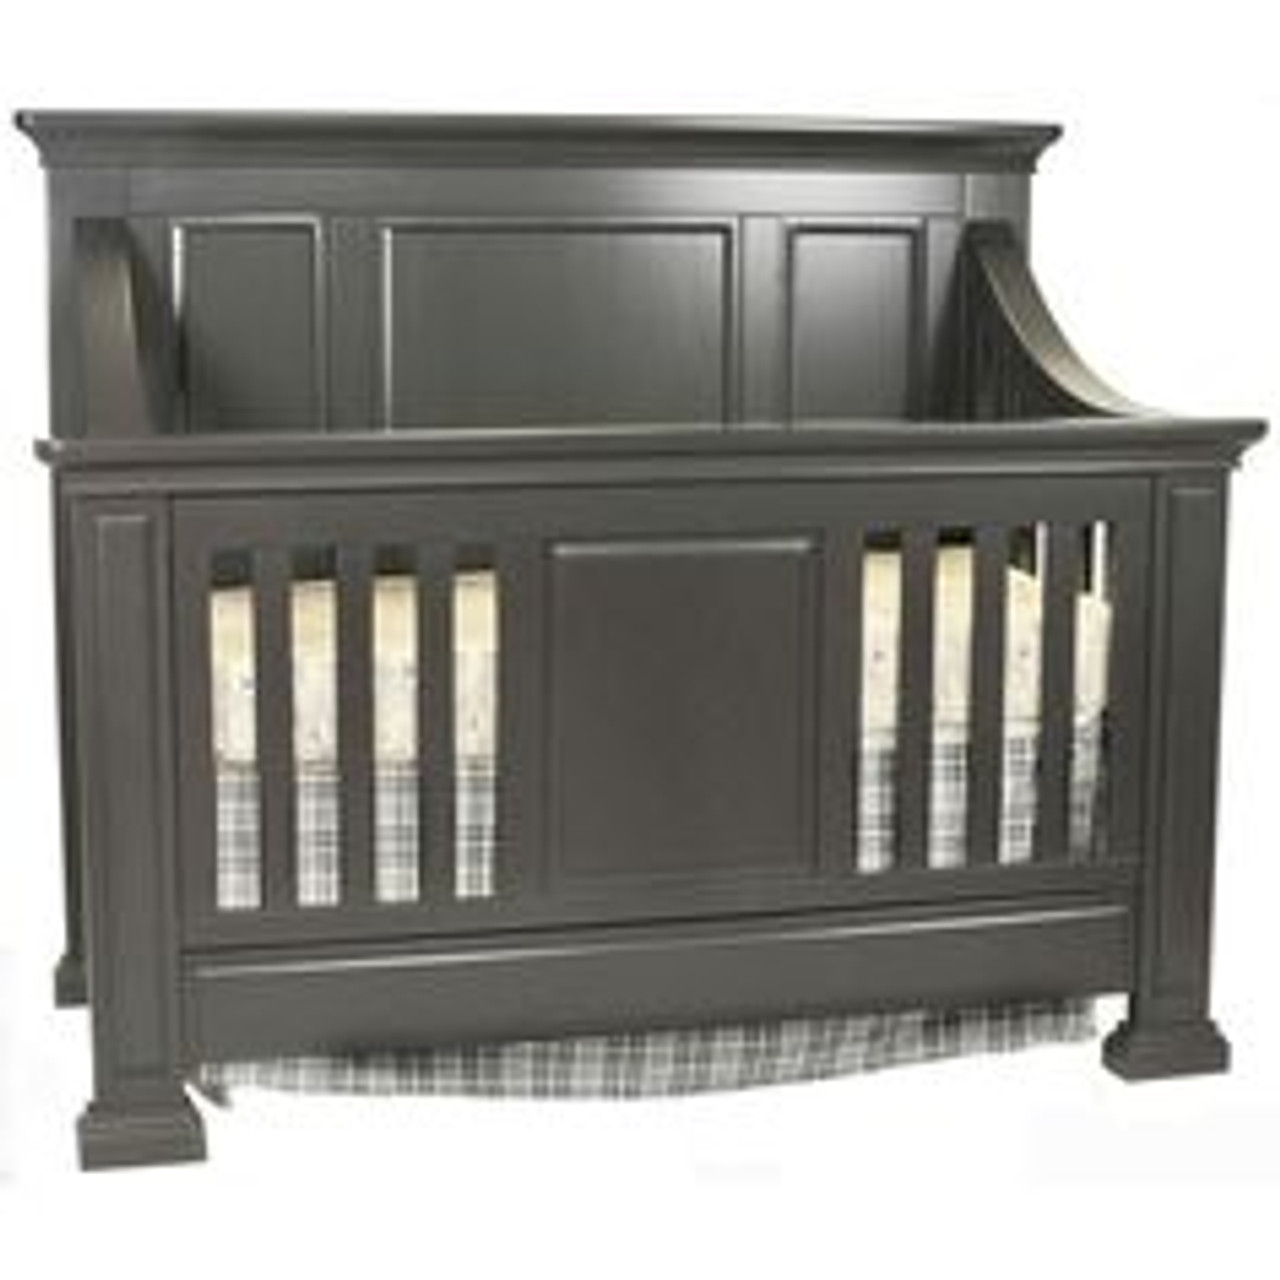 babys dream crib